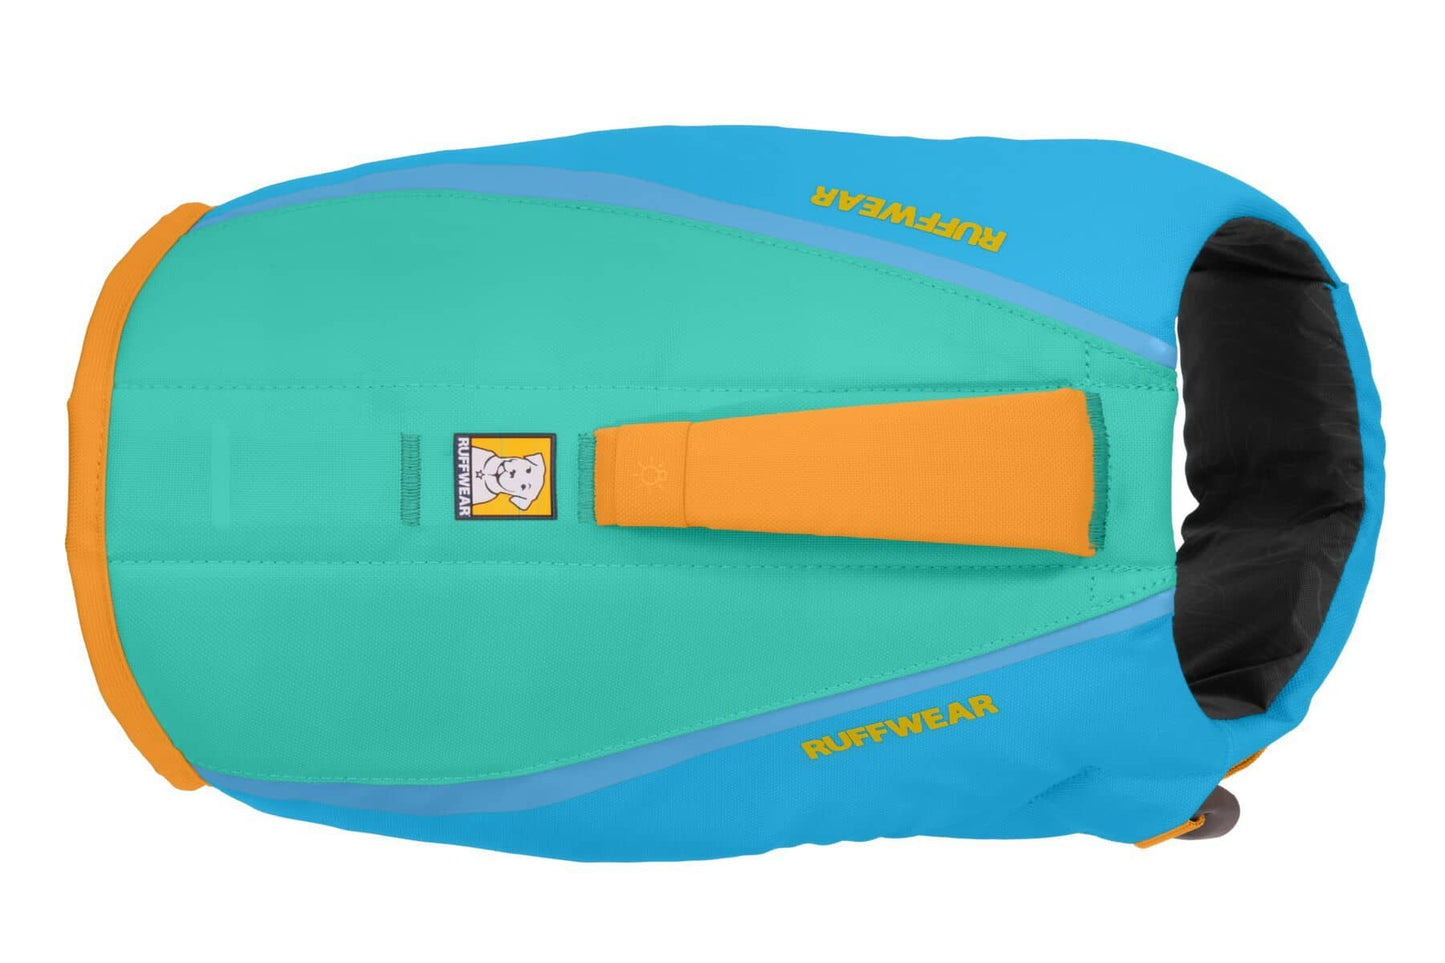 Overview of the Float Coat Lifejacket.